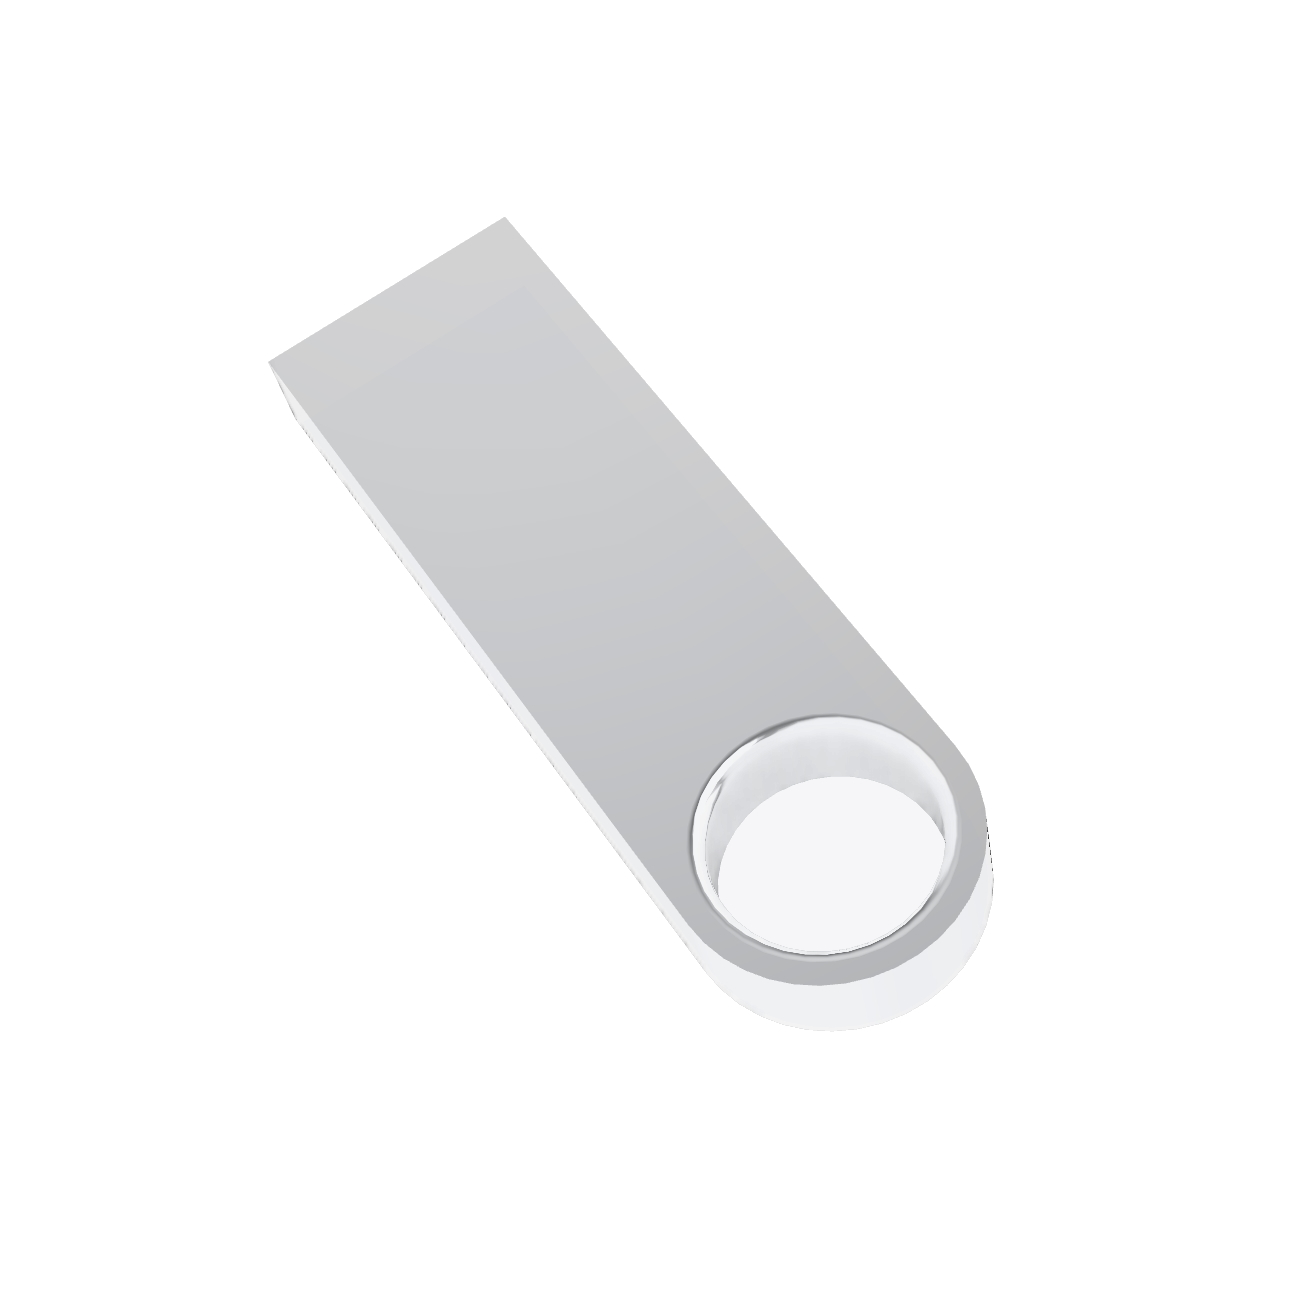 GERMANY GB) USB ® 16 (Silber, USB-Stick SE09